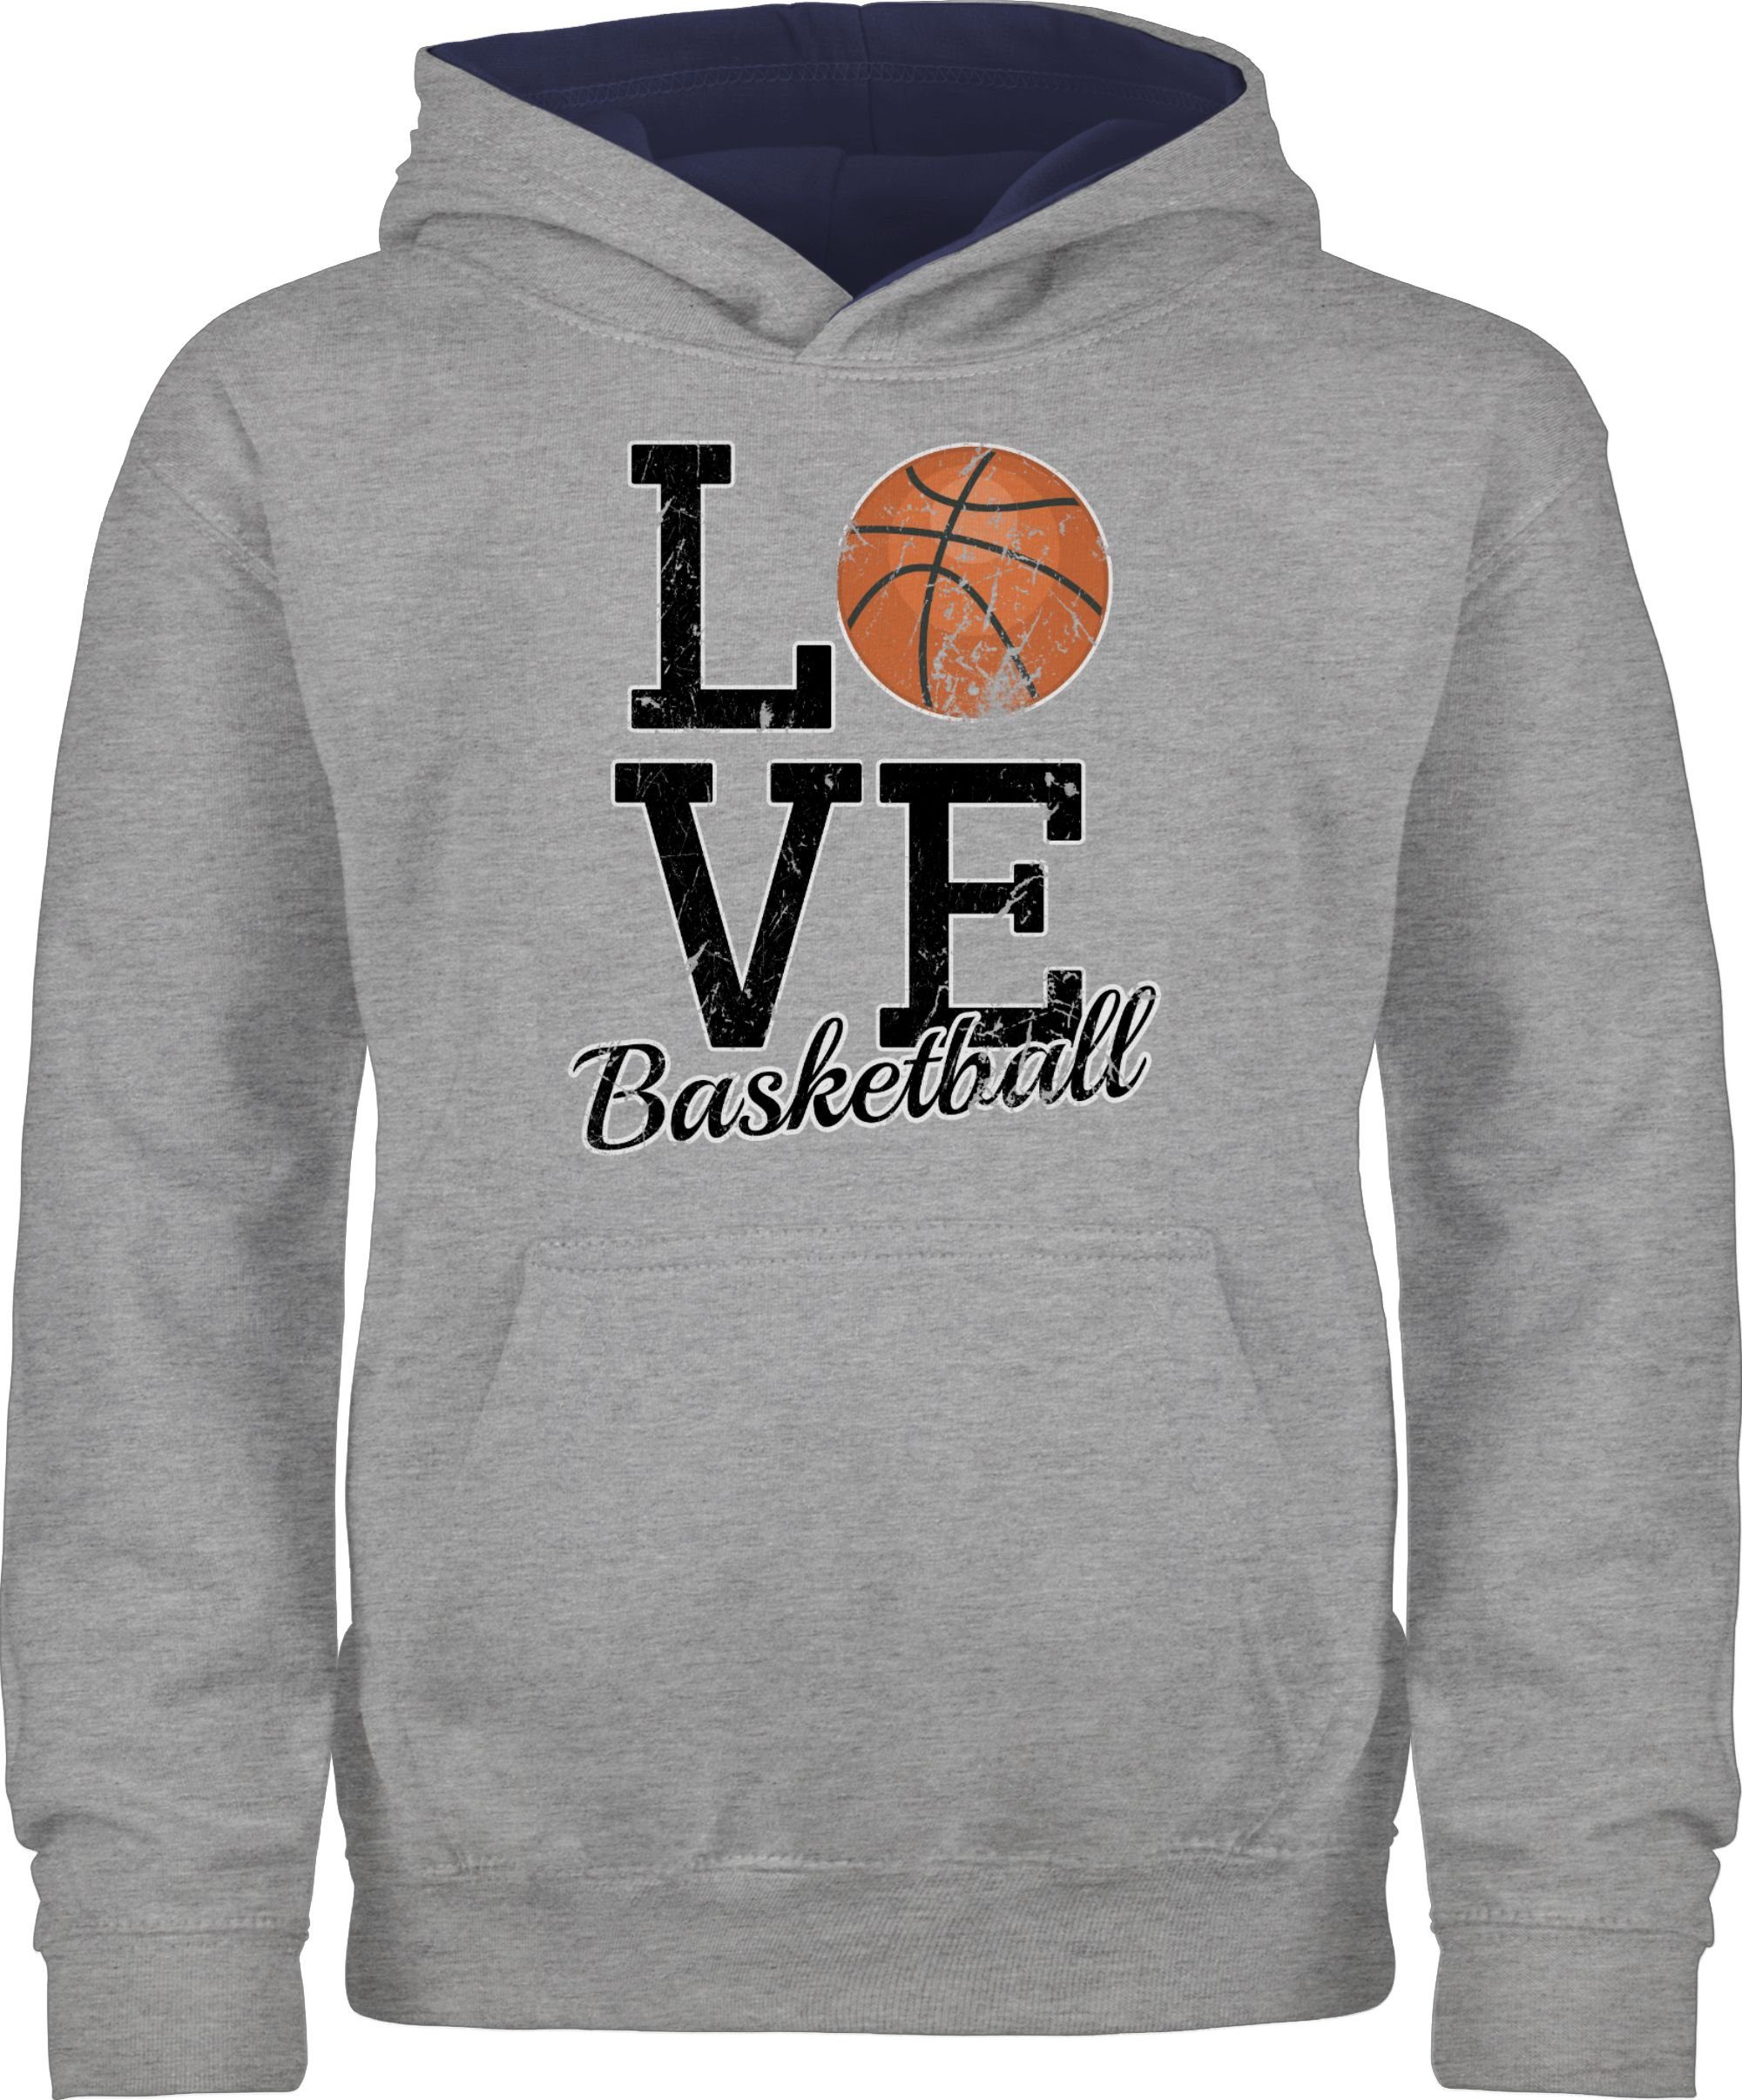 Shirtracer Hoodie Love Basketball Kinder Sport Kleidung 1 Grau meliert/Navy Blau